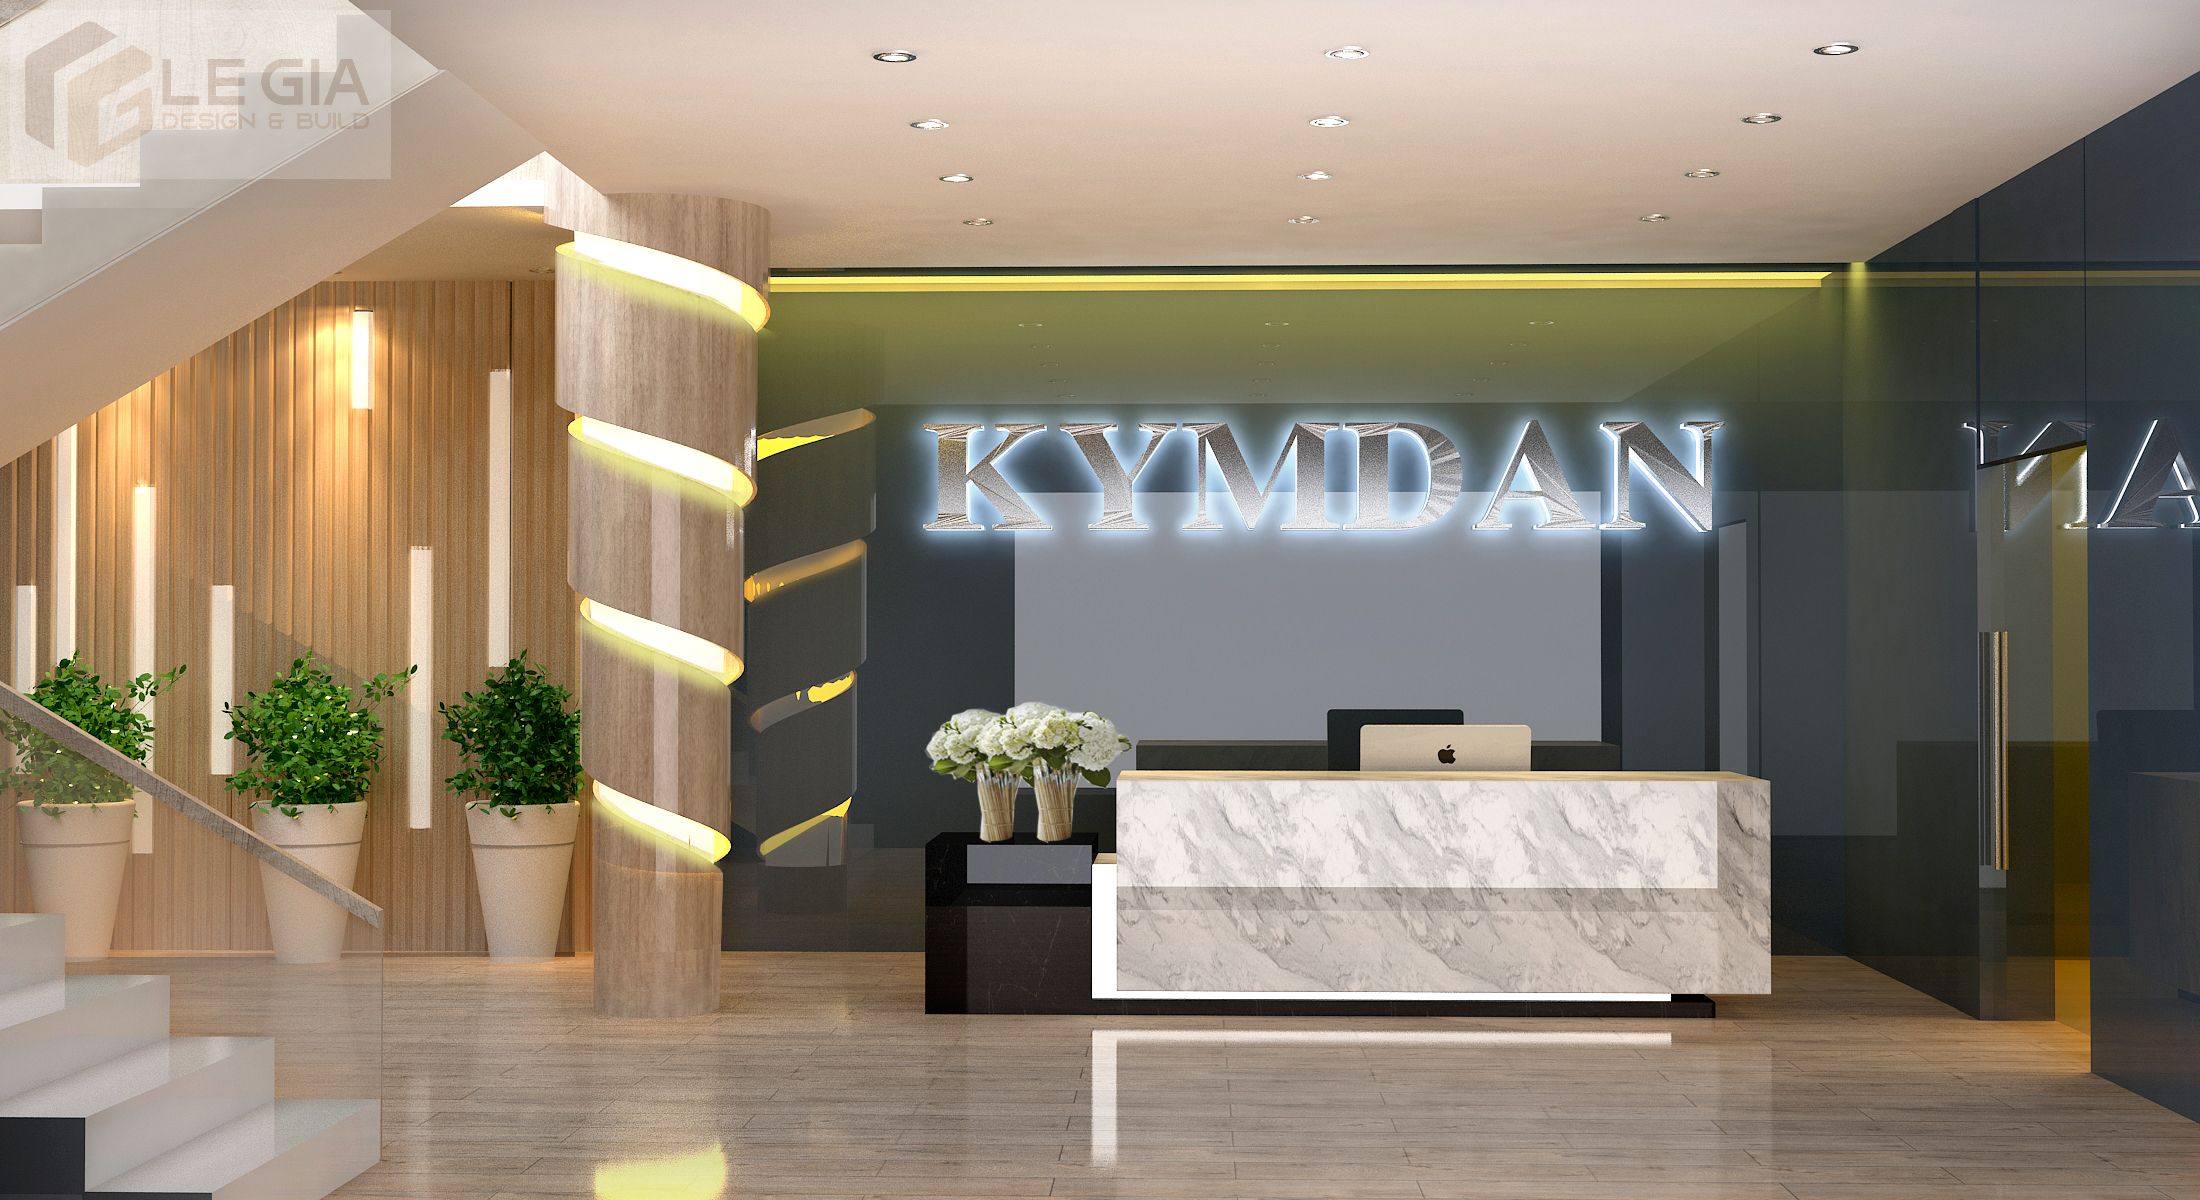 KYMDAN OFFICE